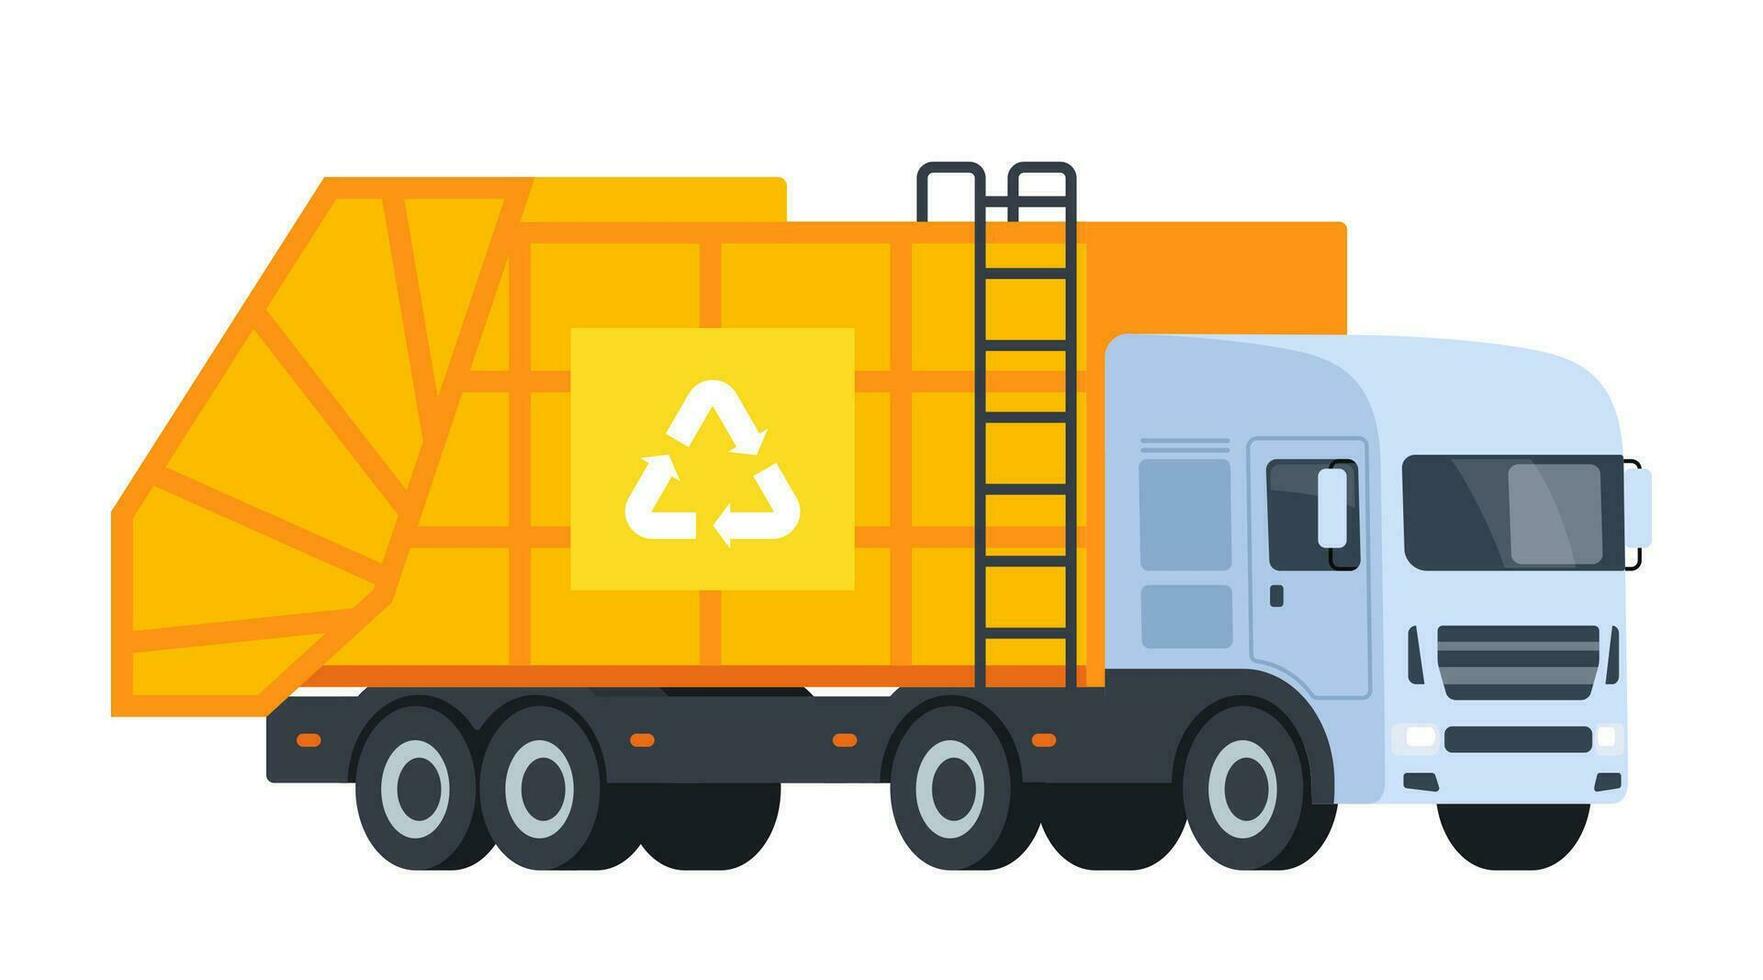 Urban garbage truck. Trash sorting, recycling. Vector illustration.